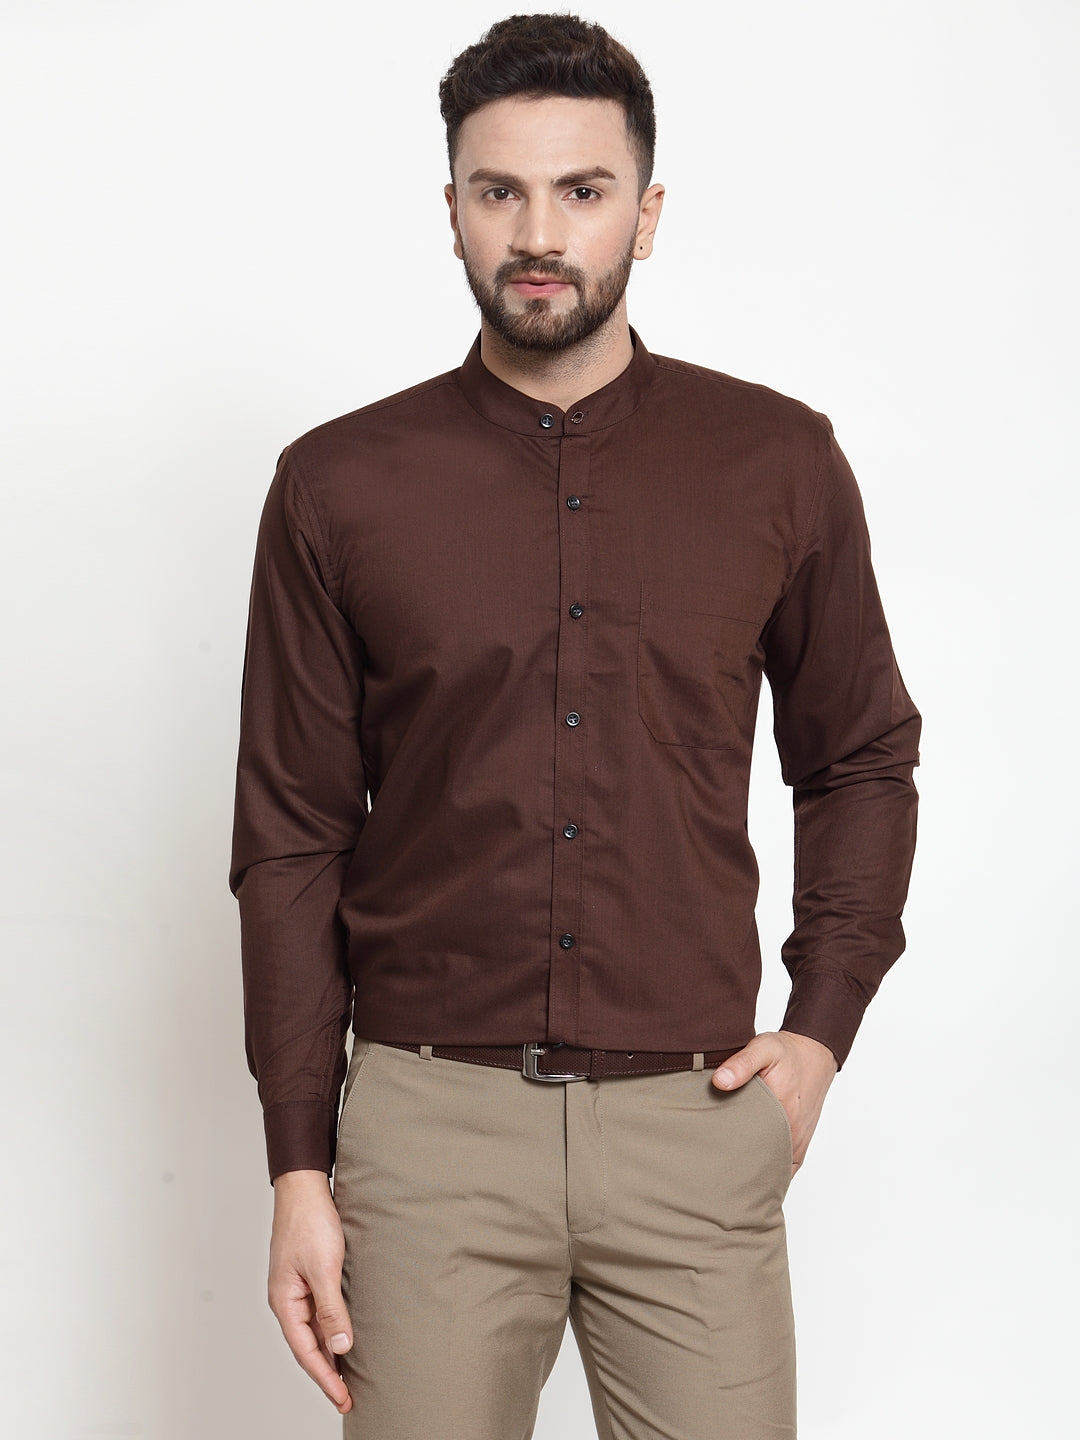 Men's Brown Cotton Solid Mandarin Collar Formal Shirts ( SF 726Coffee ) - Jainish